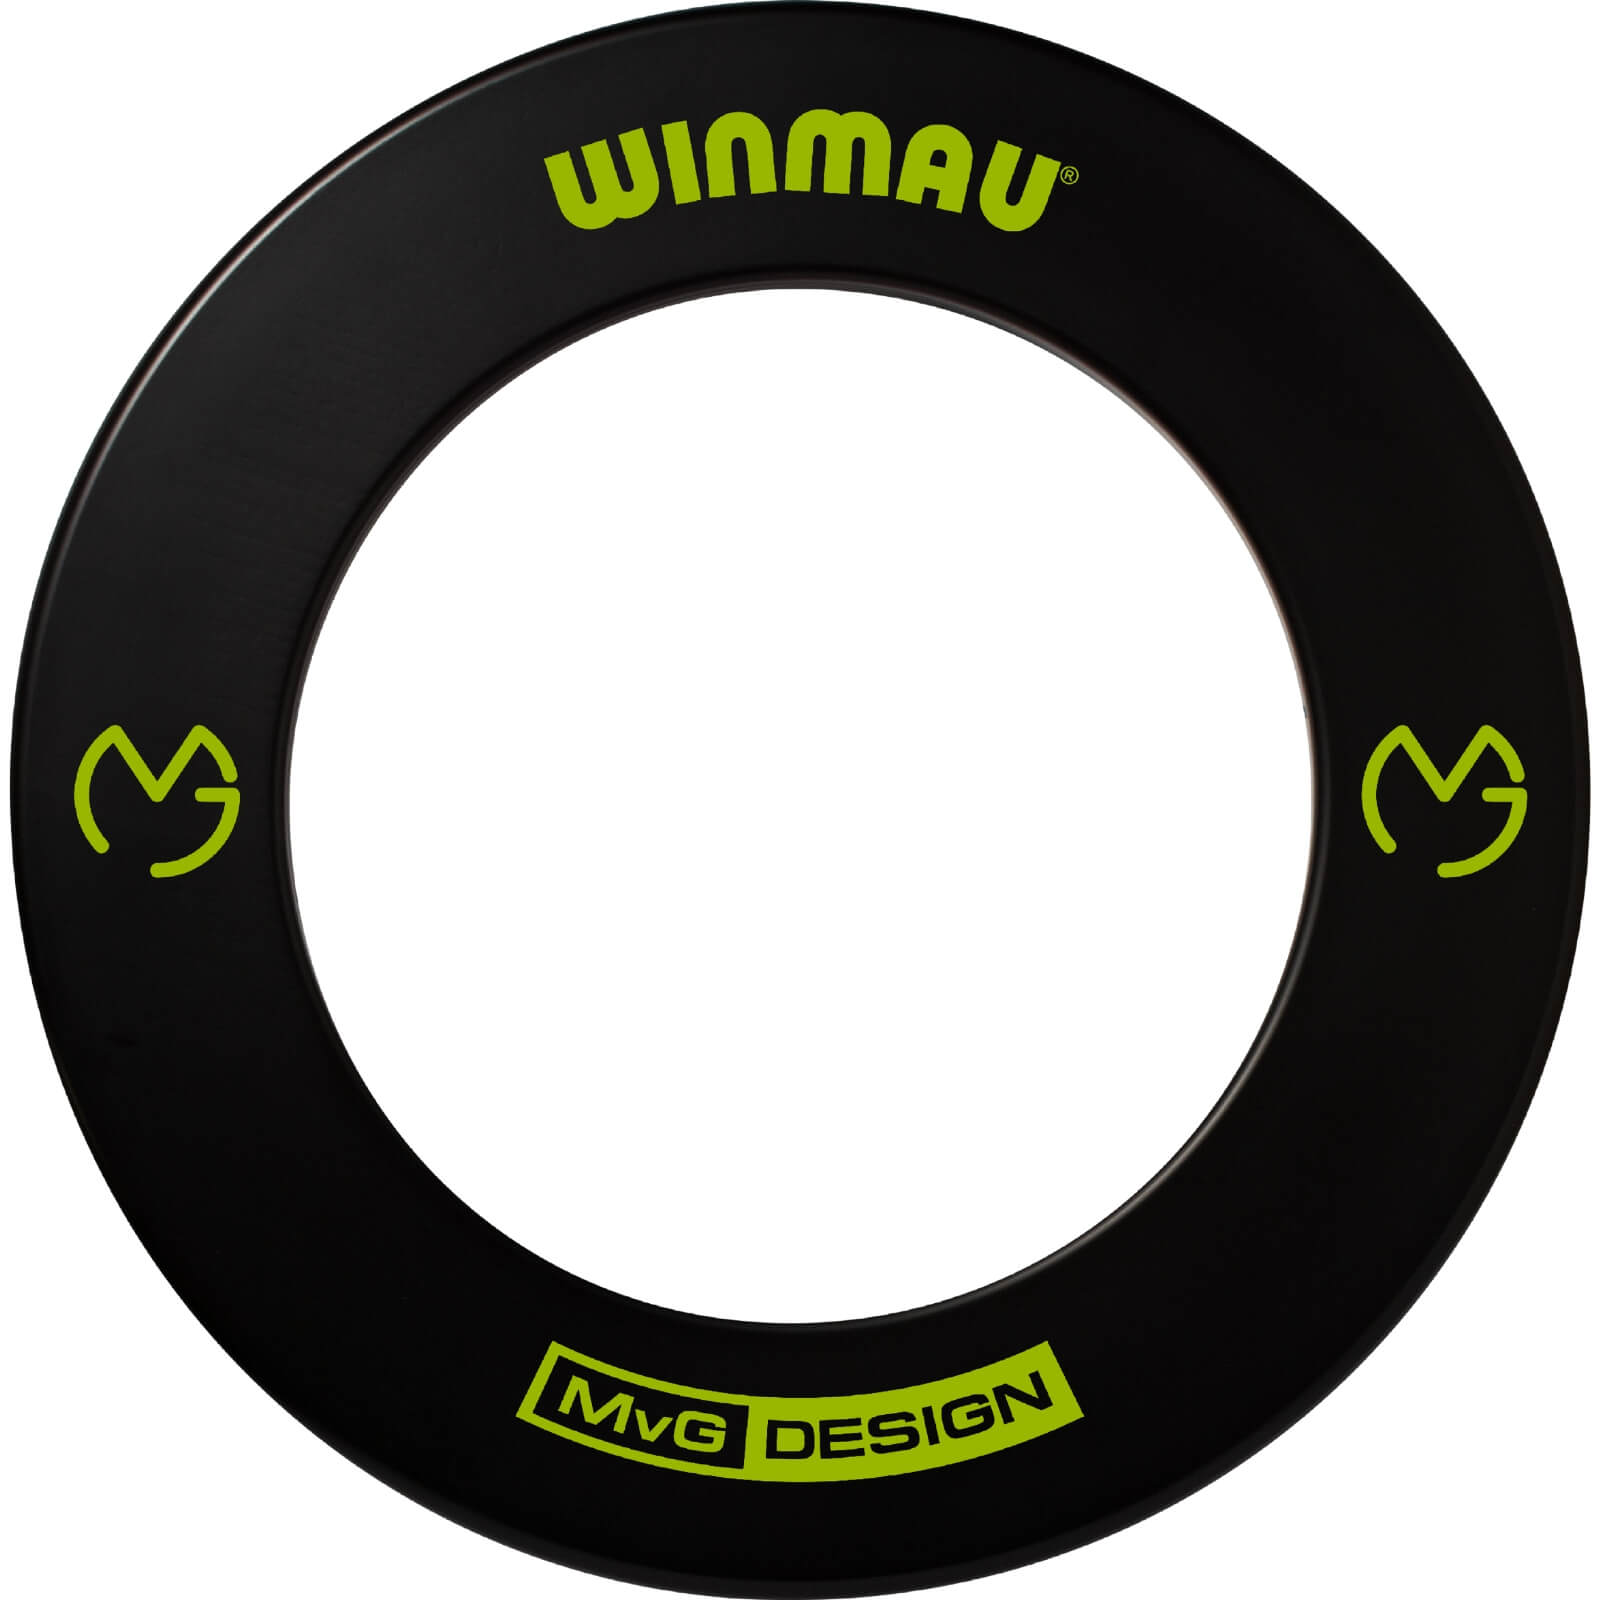 Dartboard Accessories - Winmau - MvG Design Dartboard Surround 